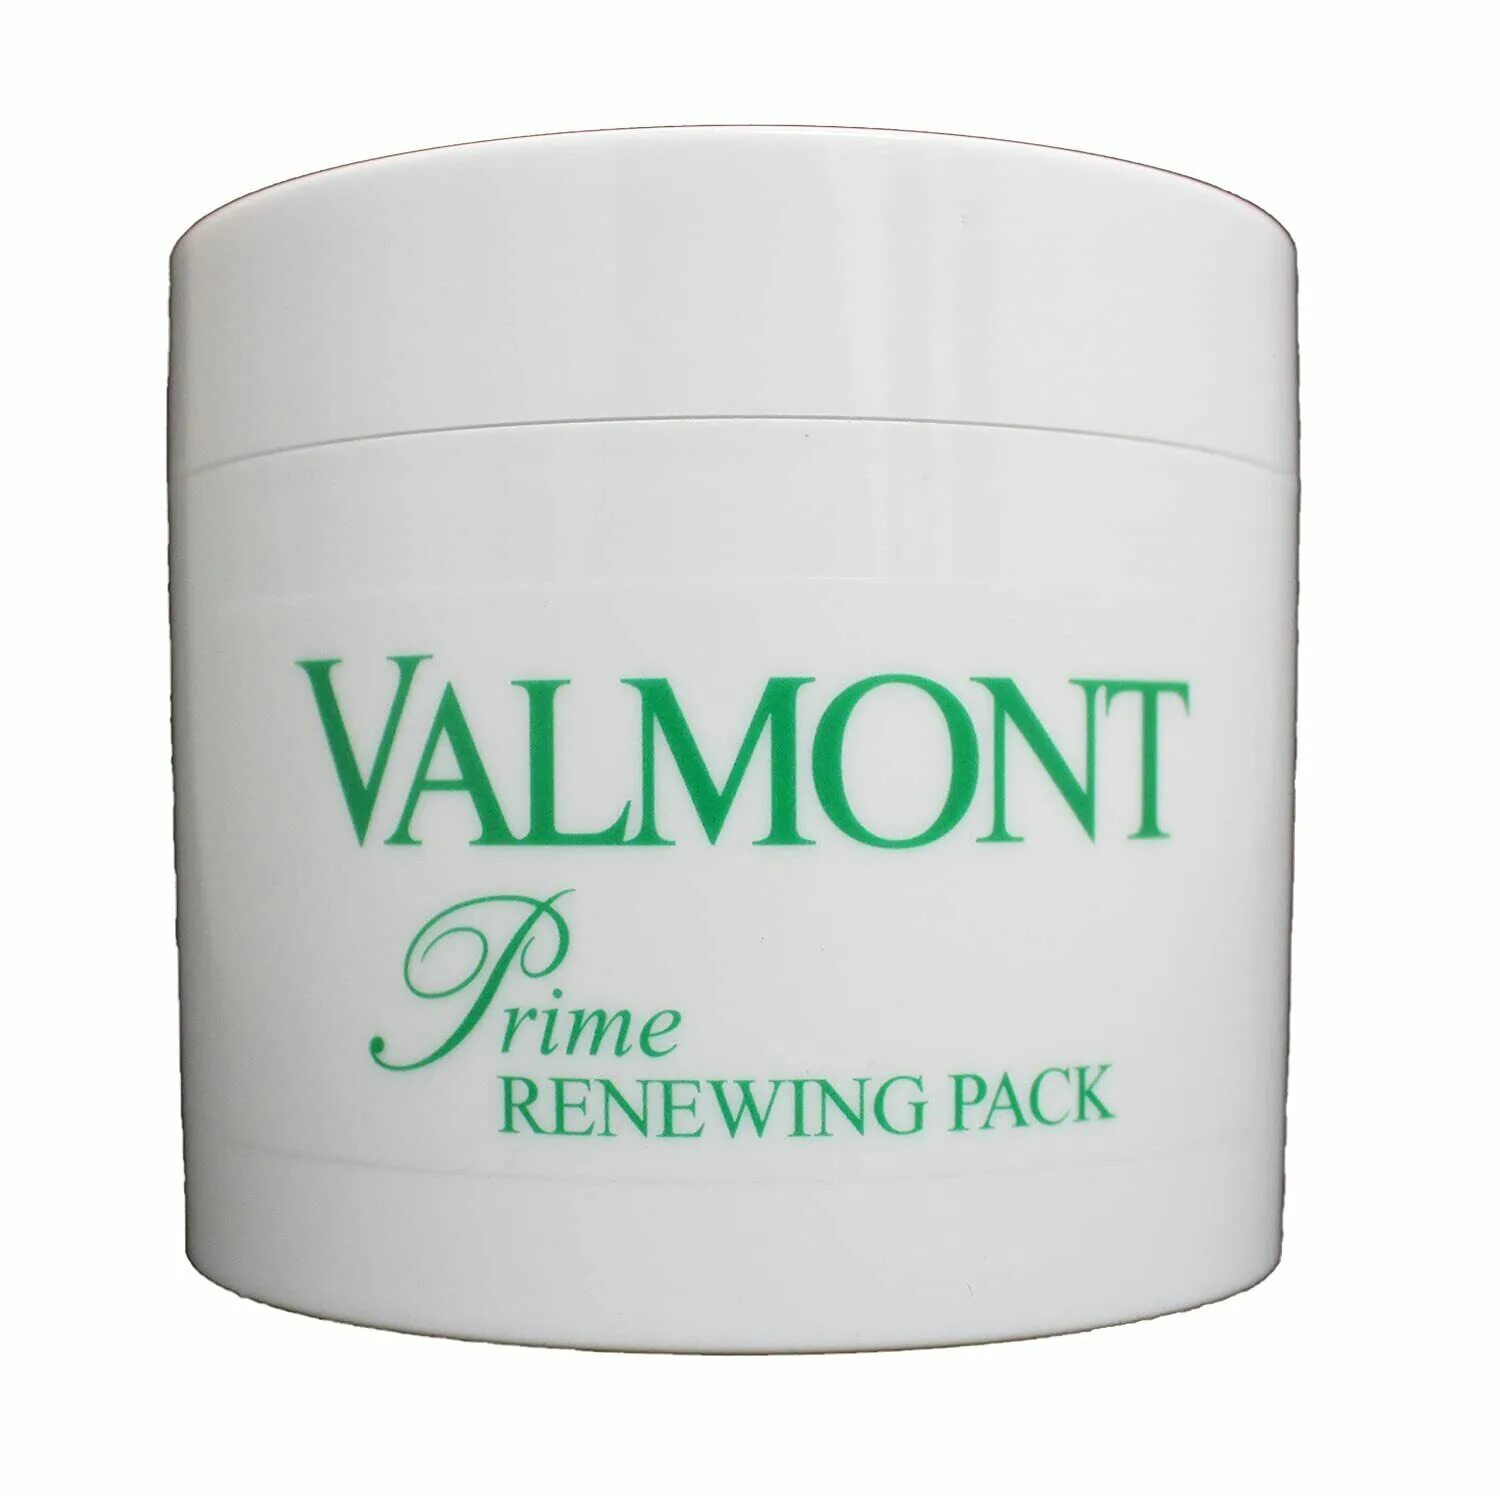 Valmont Золушка маска 200ml. Маска Valmont Prime Renewing Pack. Valmont Renewing Pack 200 мл. Valmont Prime Renewing Pack 200ml. Valmont золушка